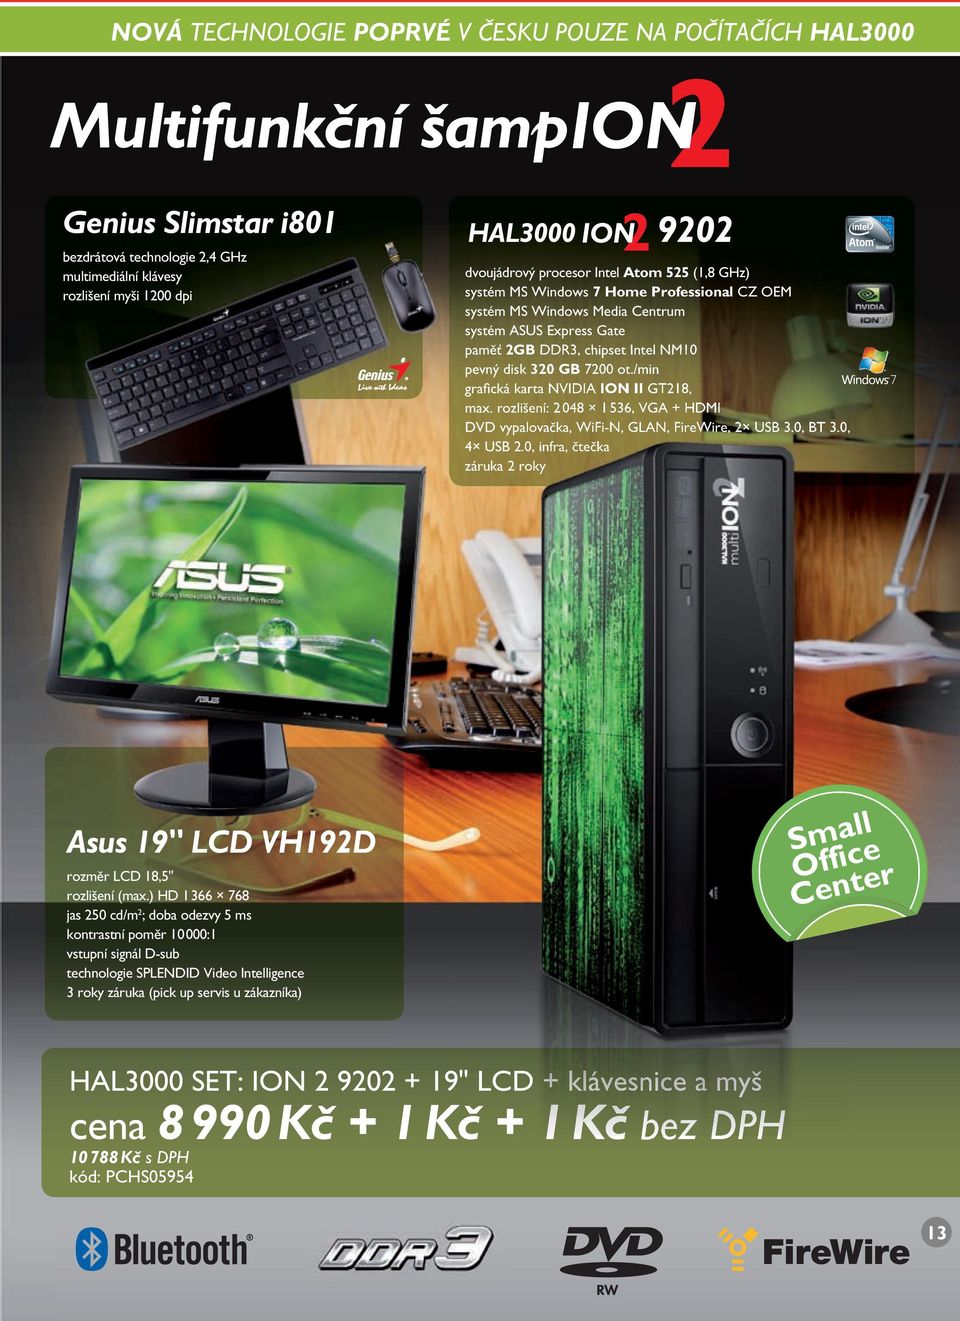 GB 7200 ot./min grafi cká karta NVIDIA ION II GT218, max. rozlišení: 2 048 1 536, VGA + HDMI DVD vypalovačka, WiFi-N, GLAN, FireWire, 2 USB 3.0, BT 3.0, 4 USB 2.